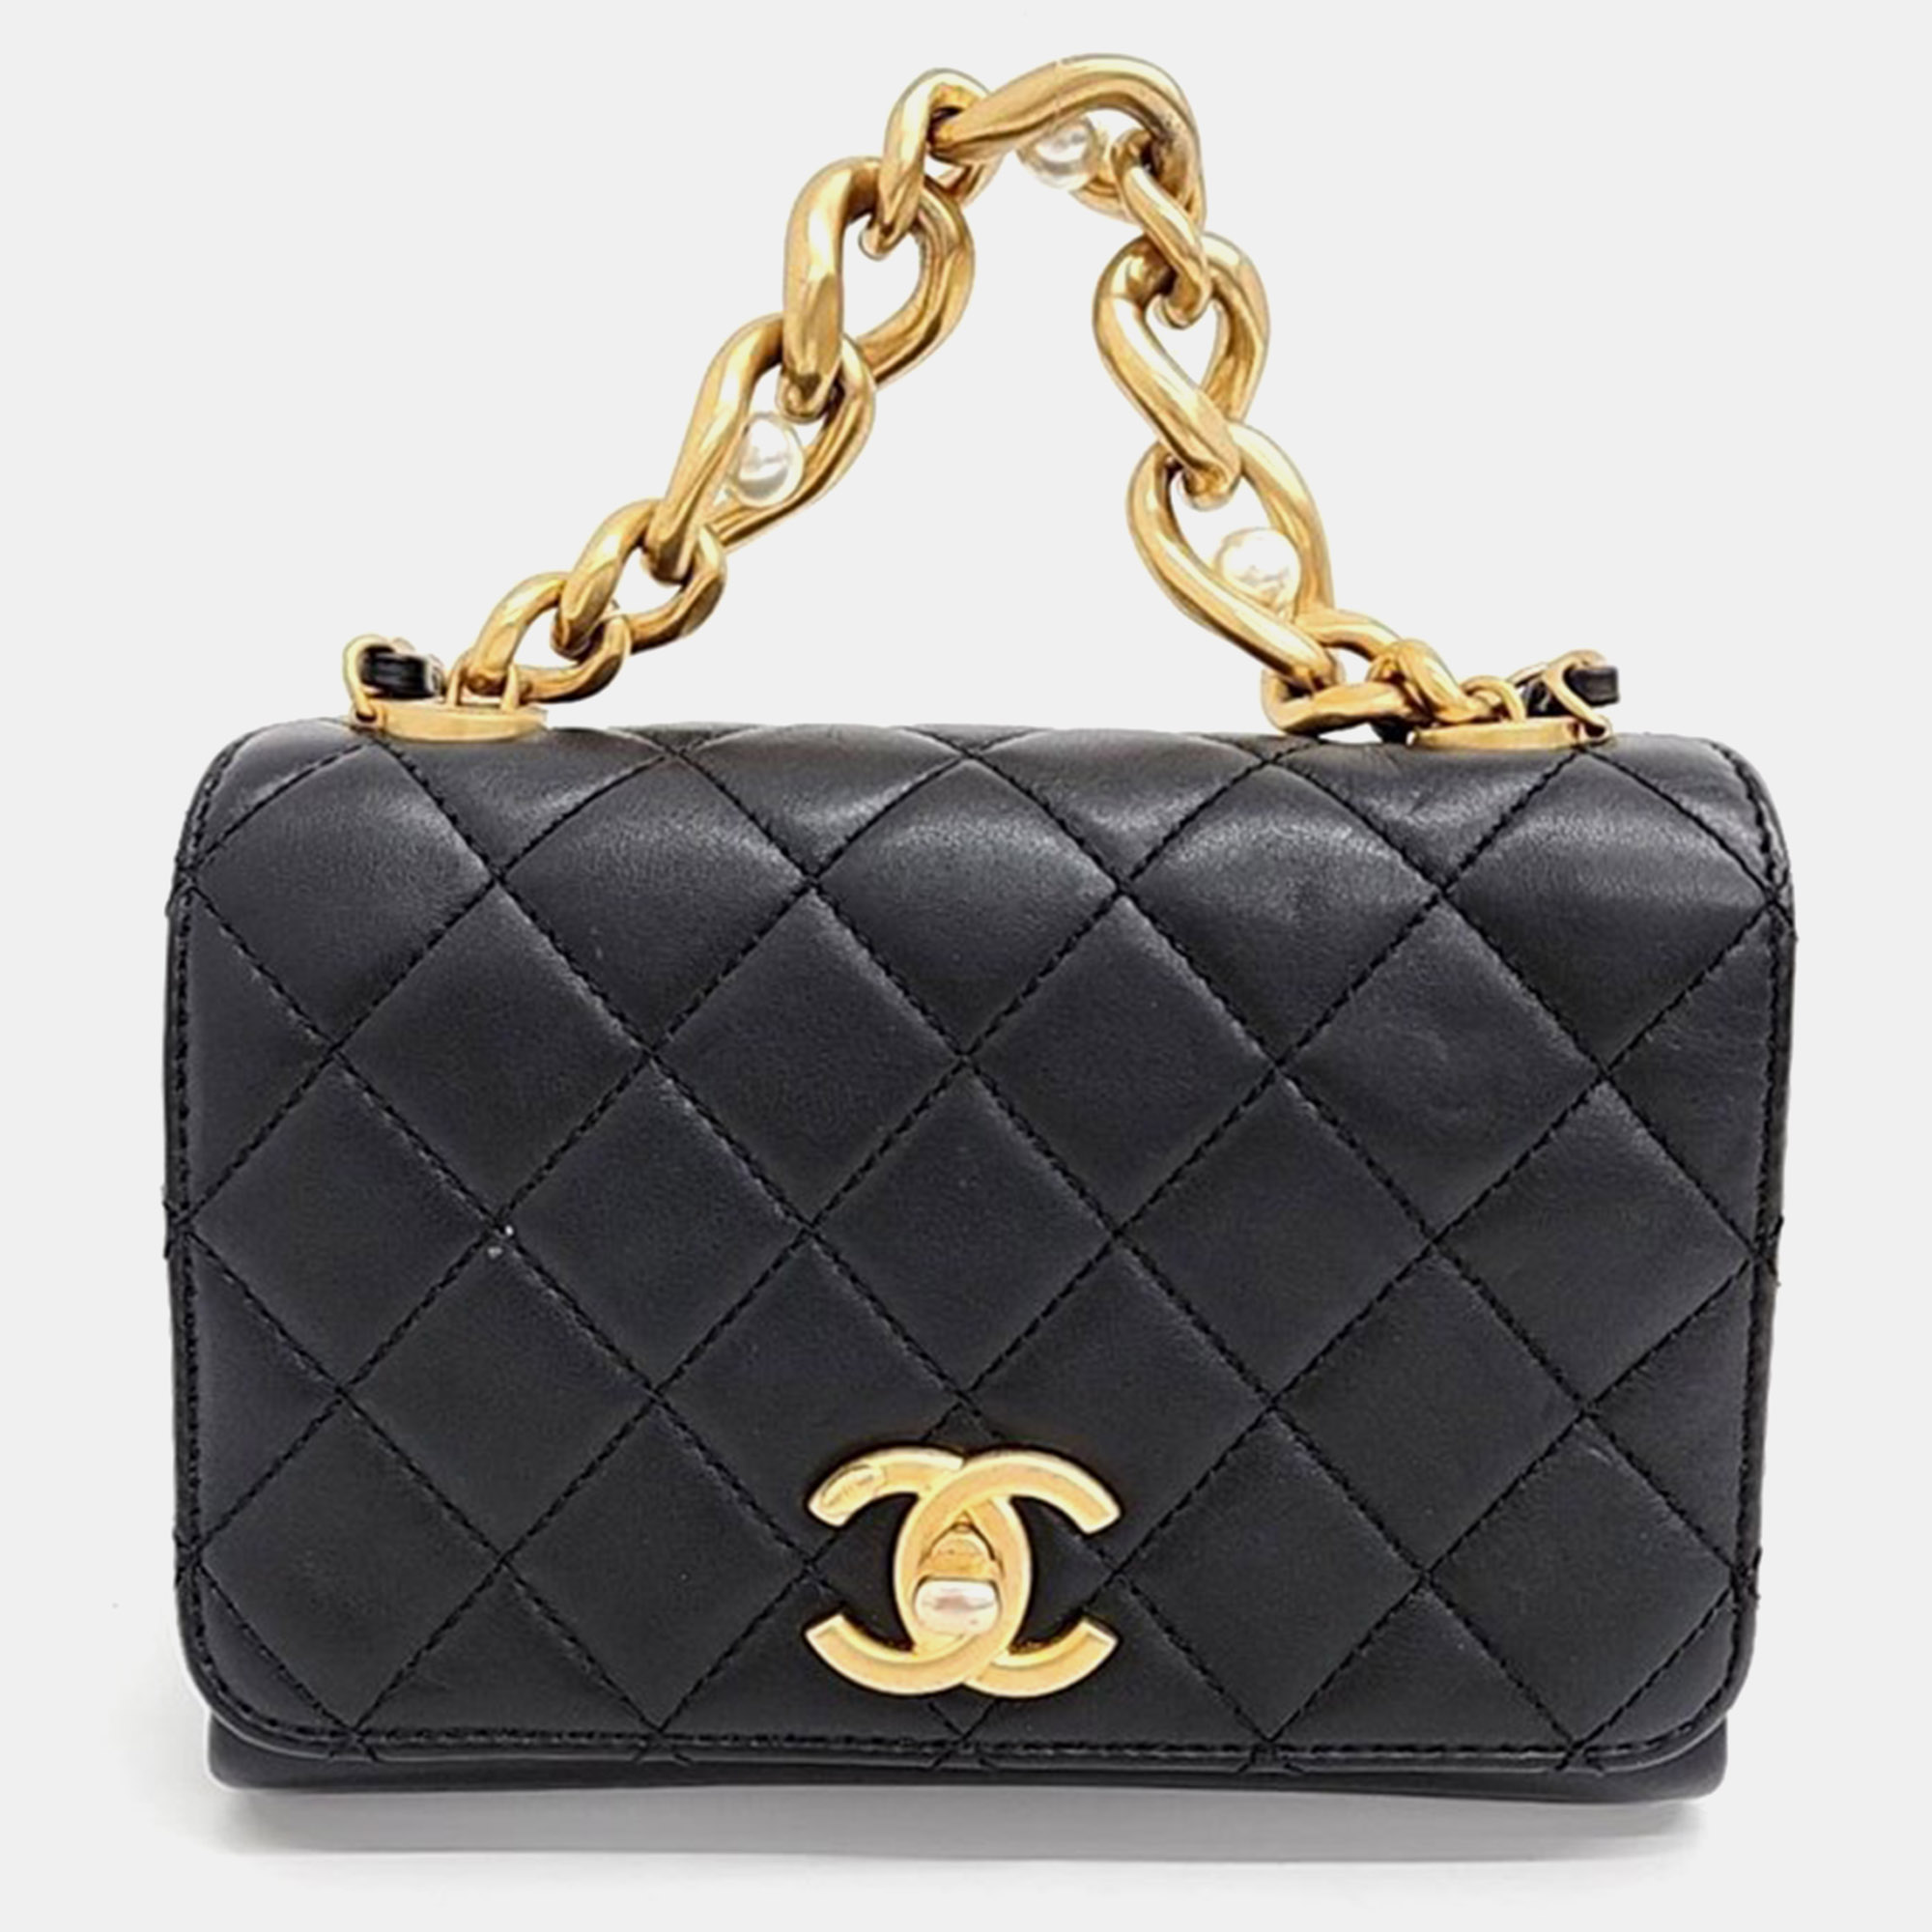 Chanel pearl flap tote/shoulder bag